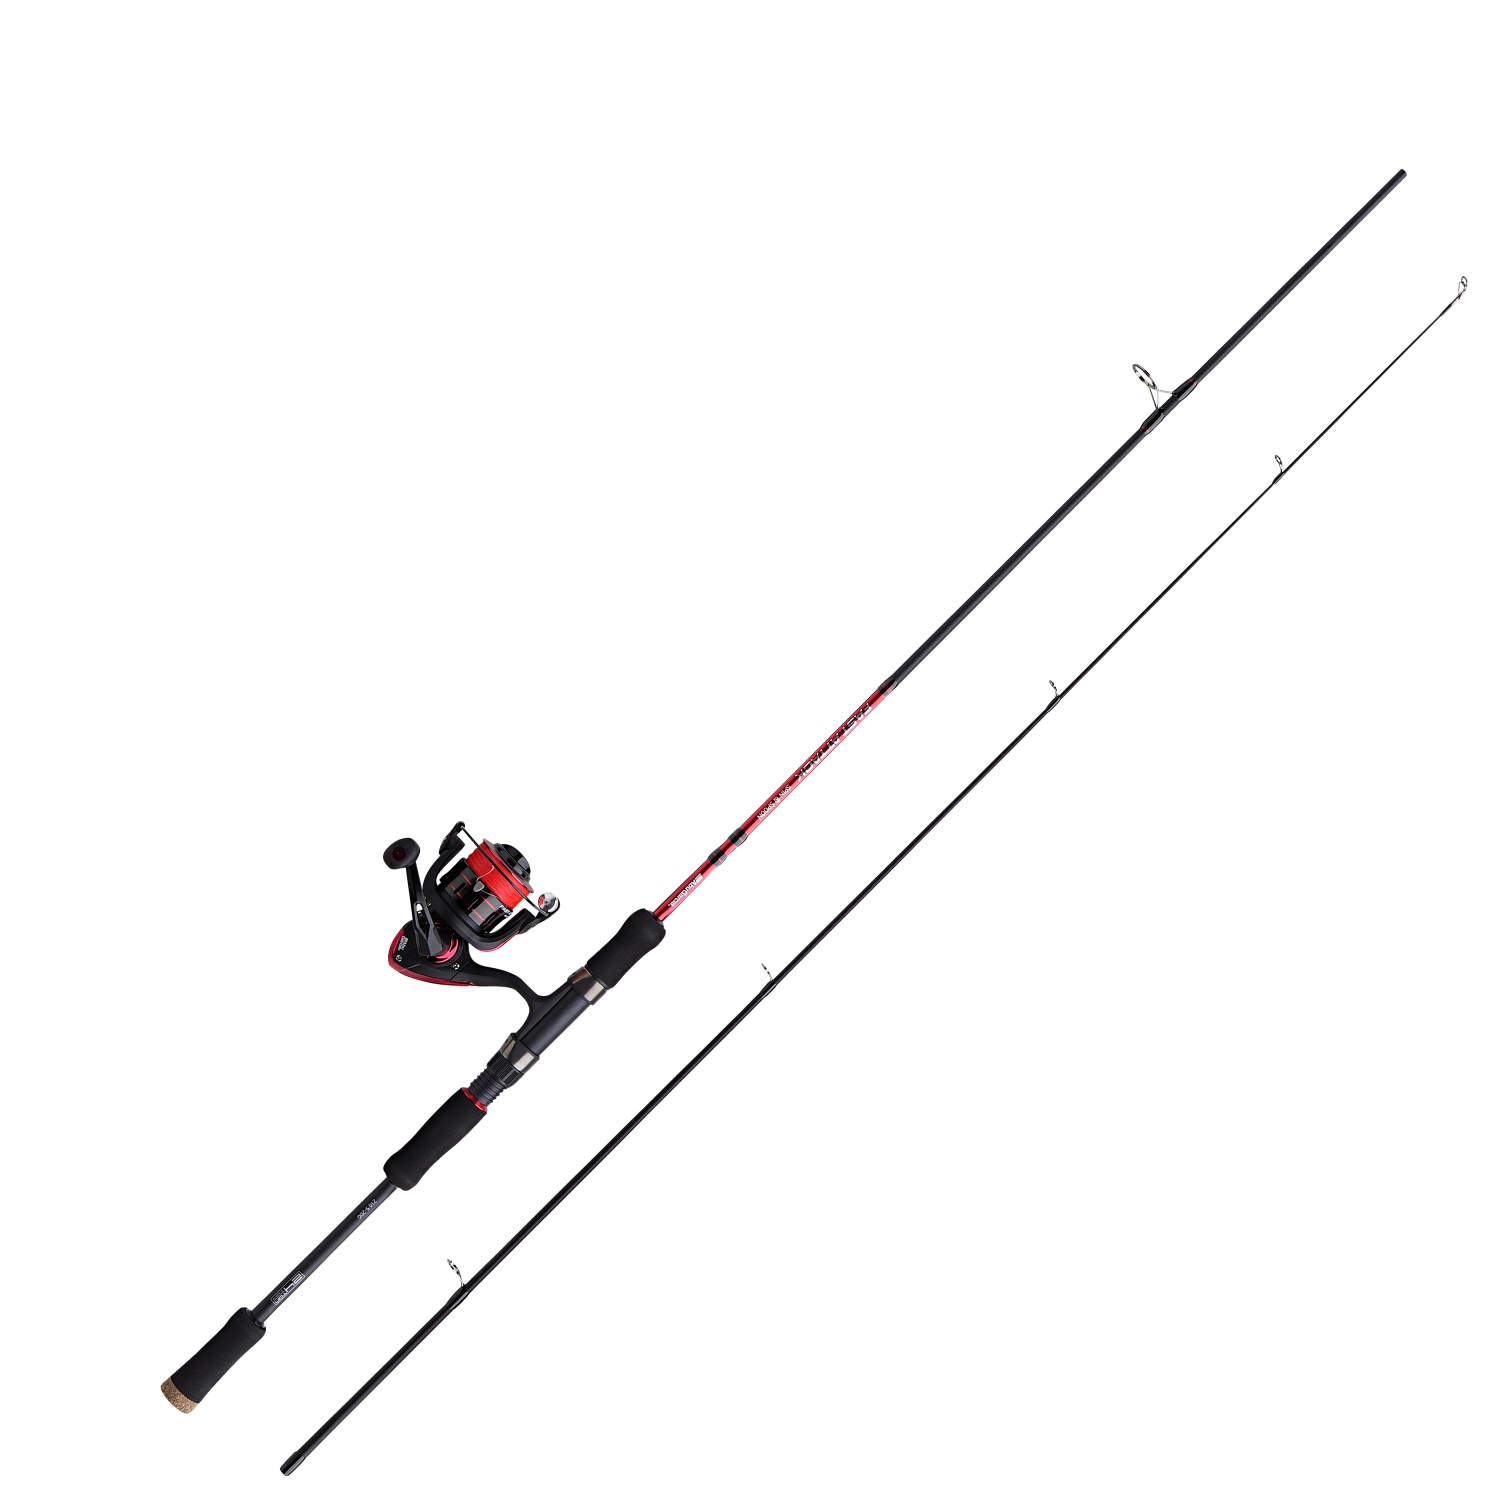 Abu Garcia Pro Max Combo 7L-19, Kits, Spinning Rods, Spin Fishing